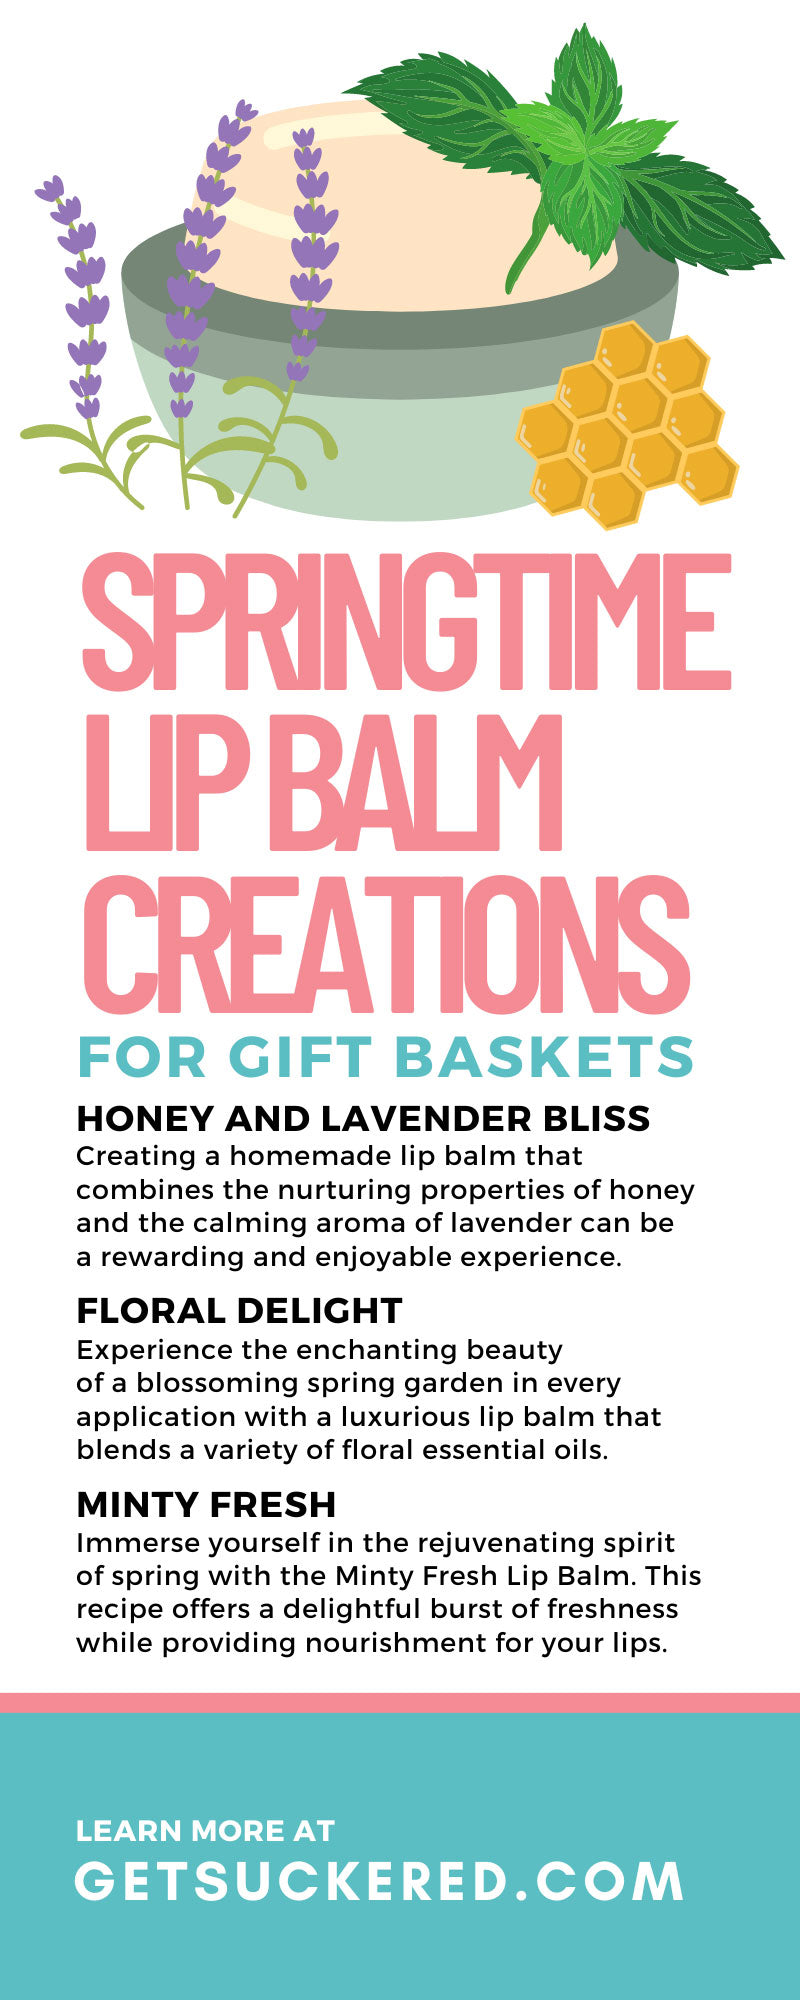 4 Springtime Lip Balm Creations for Gift Baskets